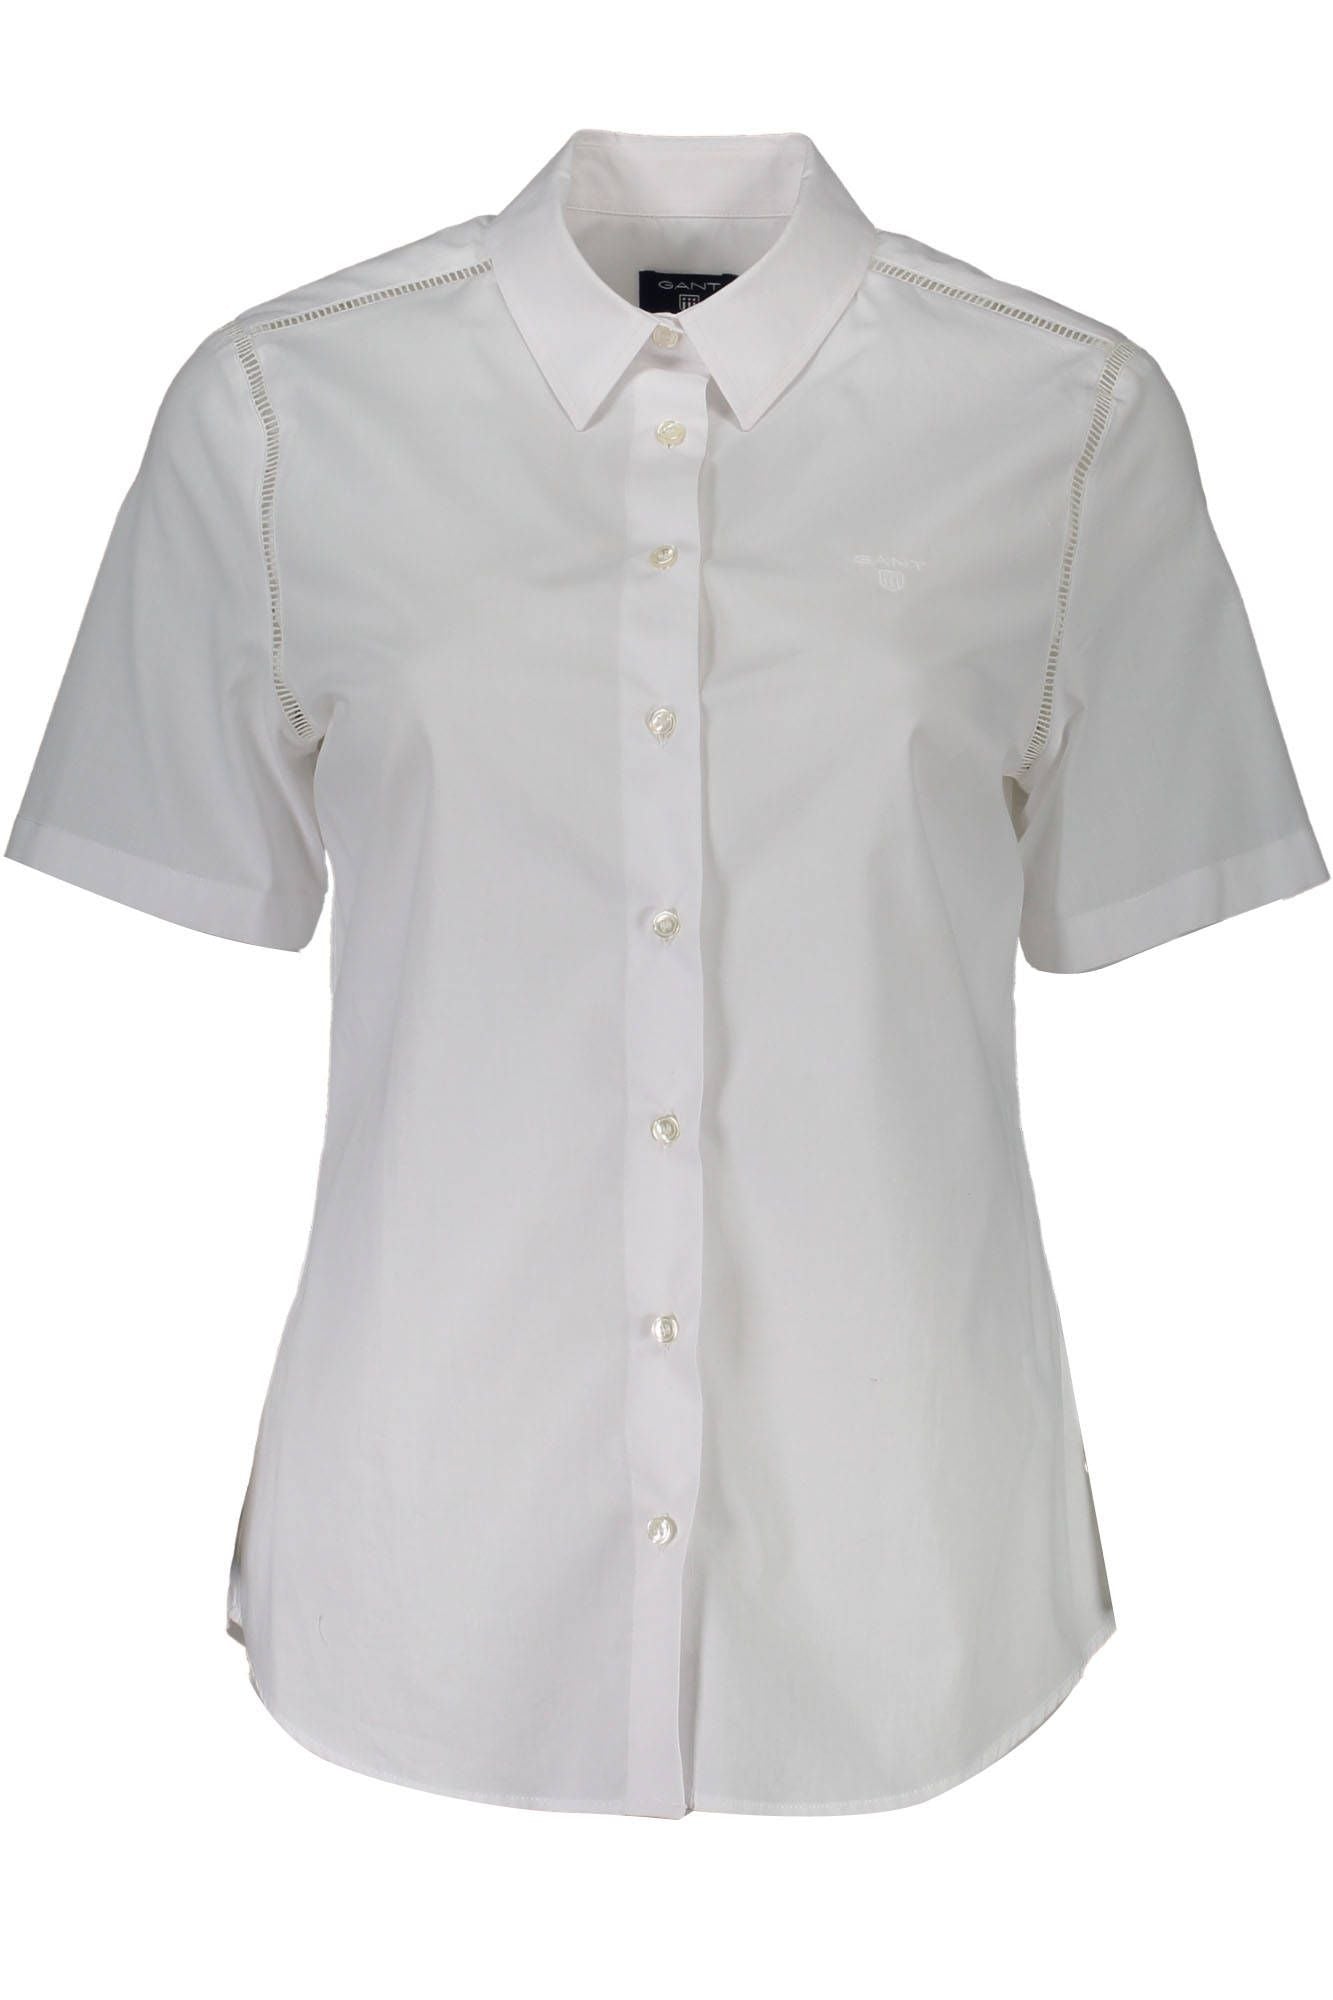 Chic Summer White Cotton Shirt with Italian Collar